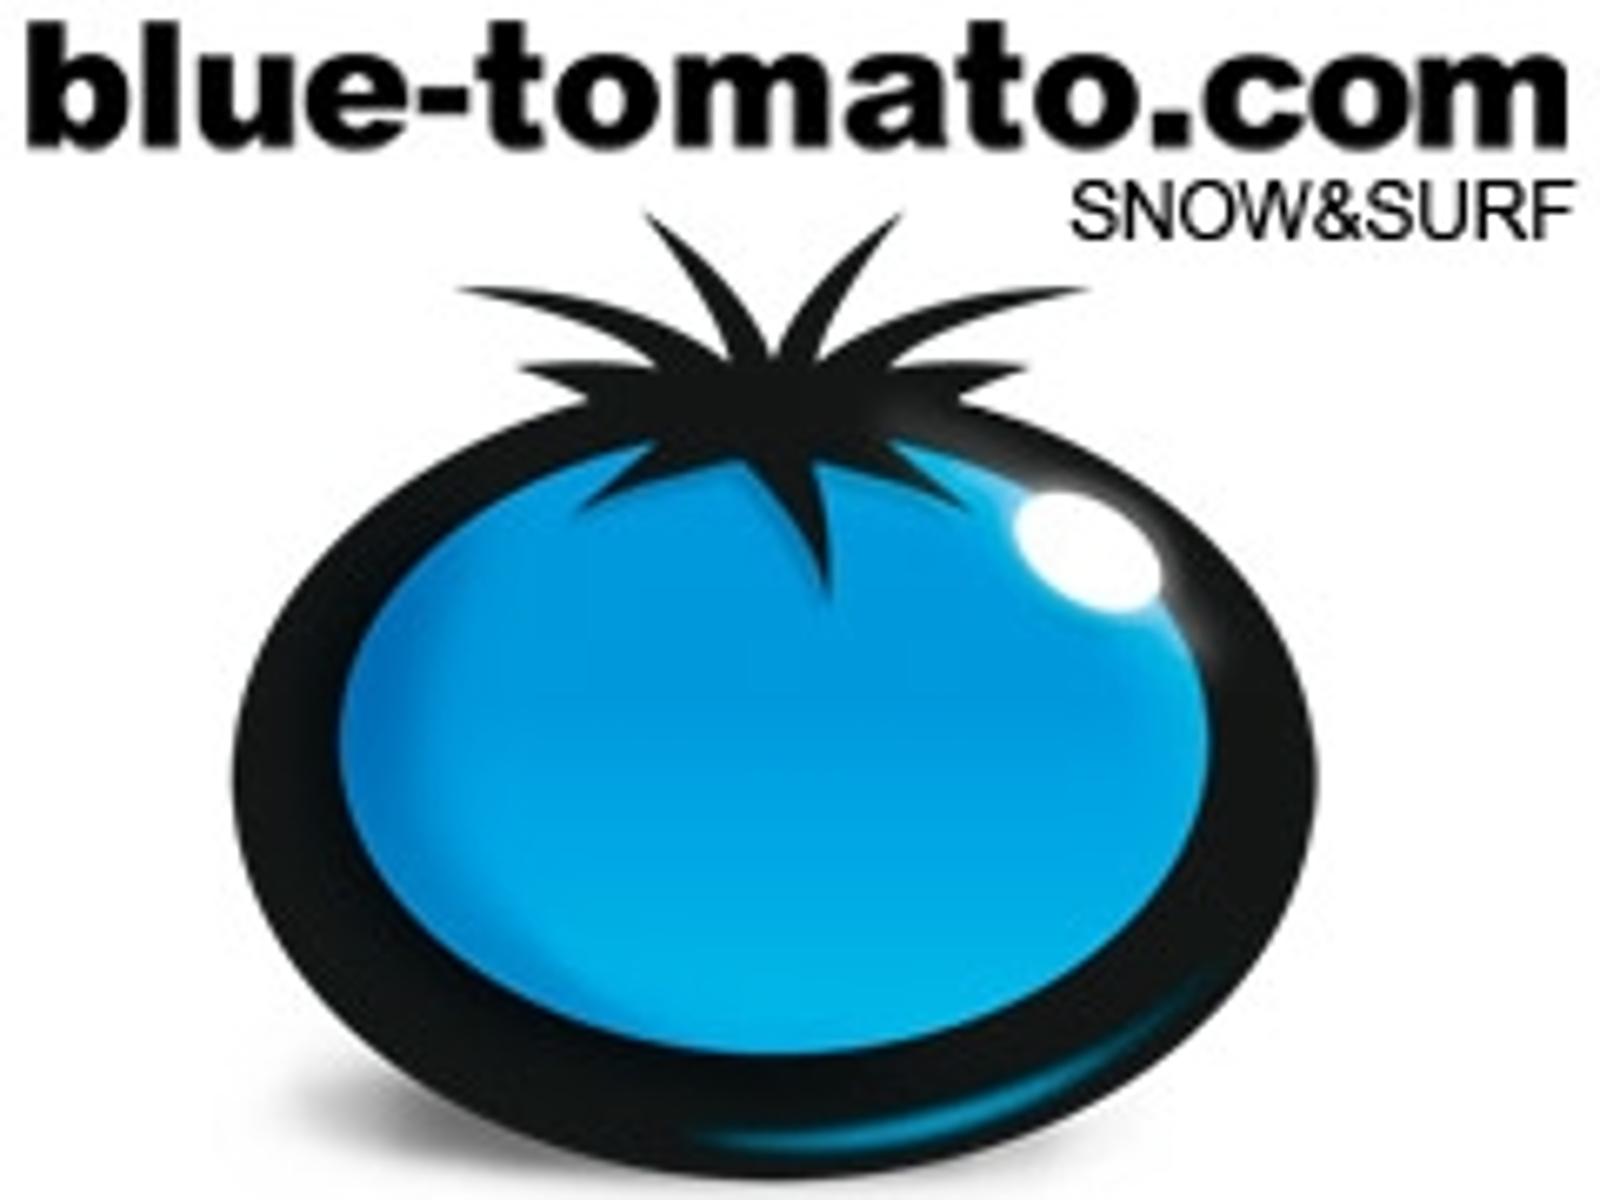 blue-tomato.jpg